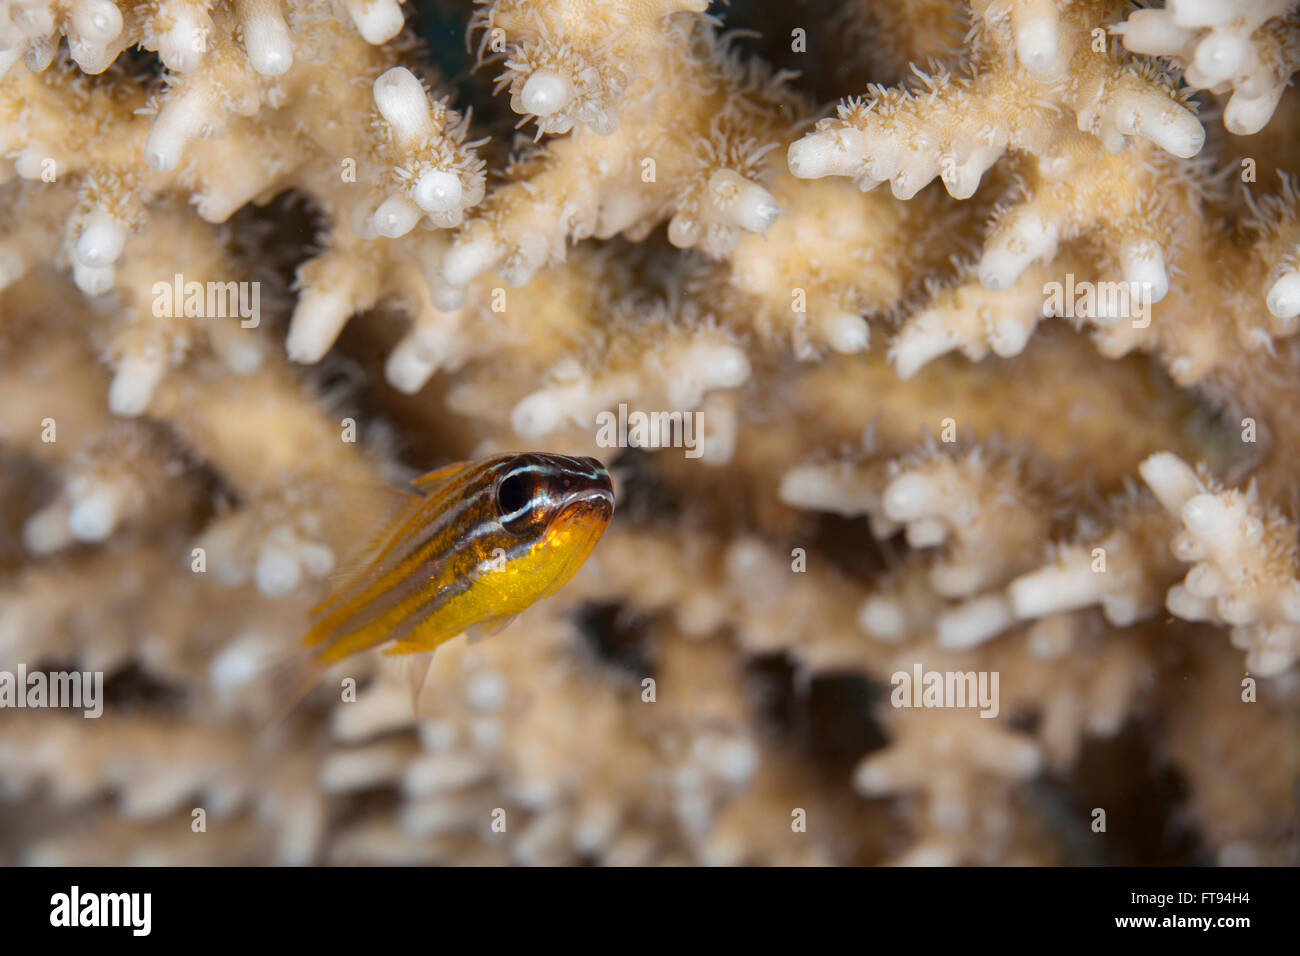 Yellow stripped cardinalfish near Acropora hard coral Stock Photo